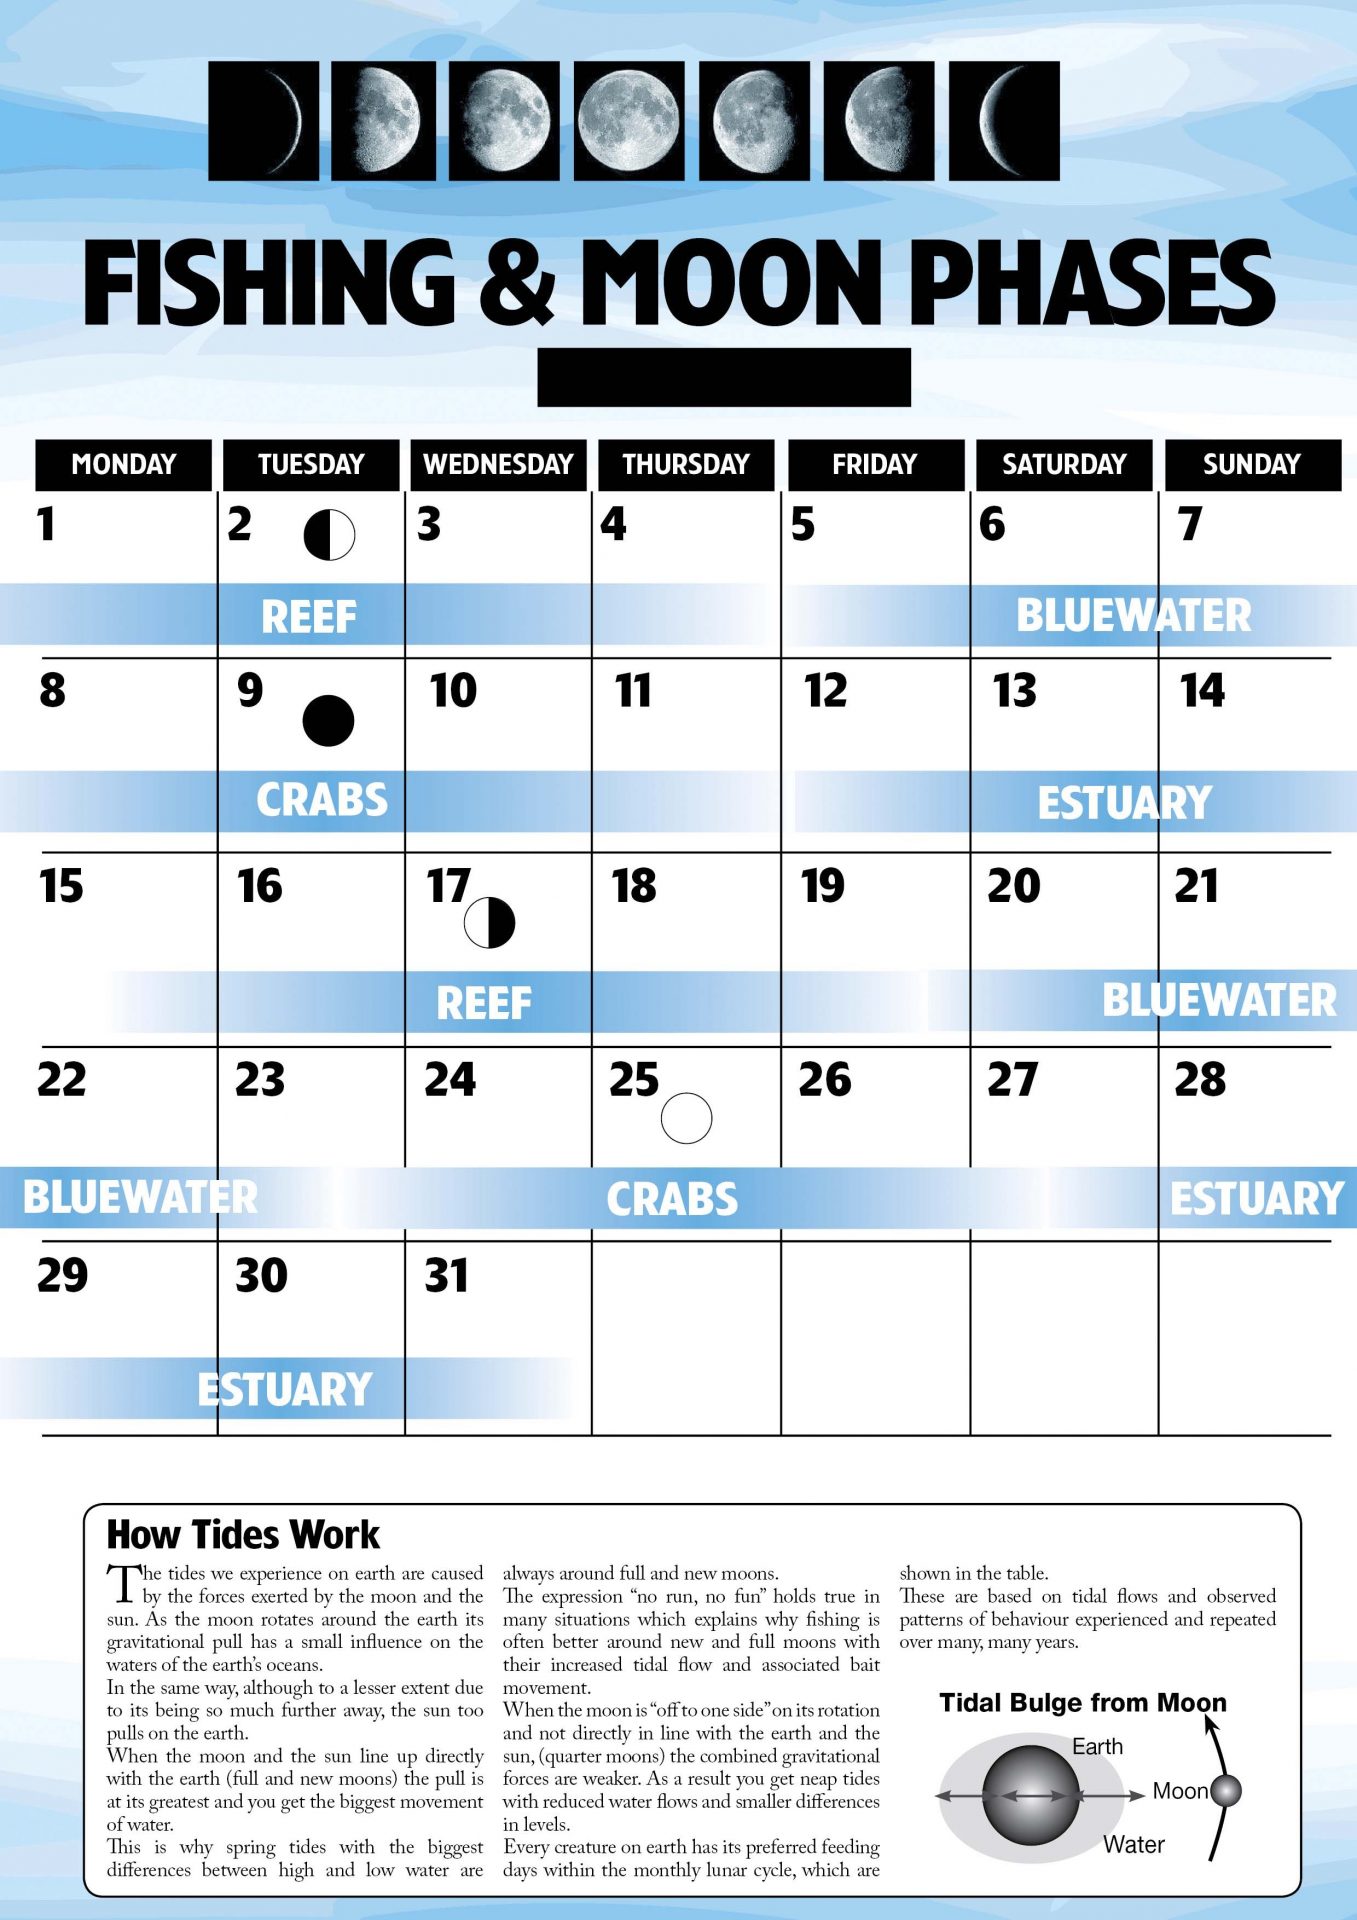 Fishing & Moon Phases Oct 18 Fish & Boat Magazine